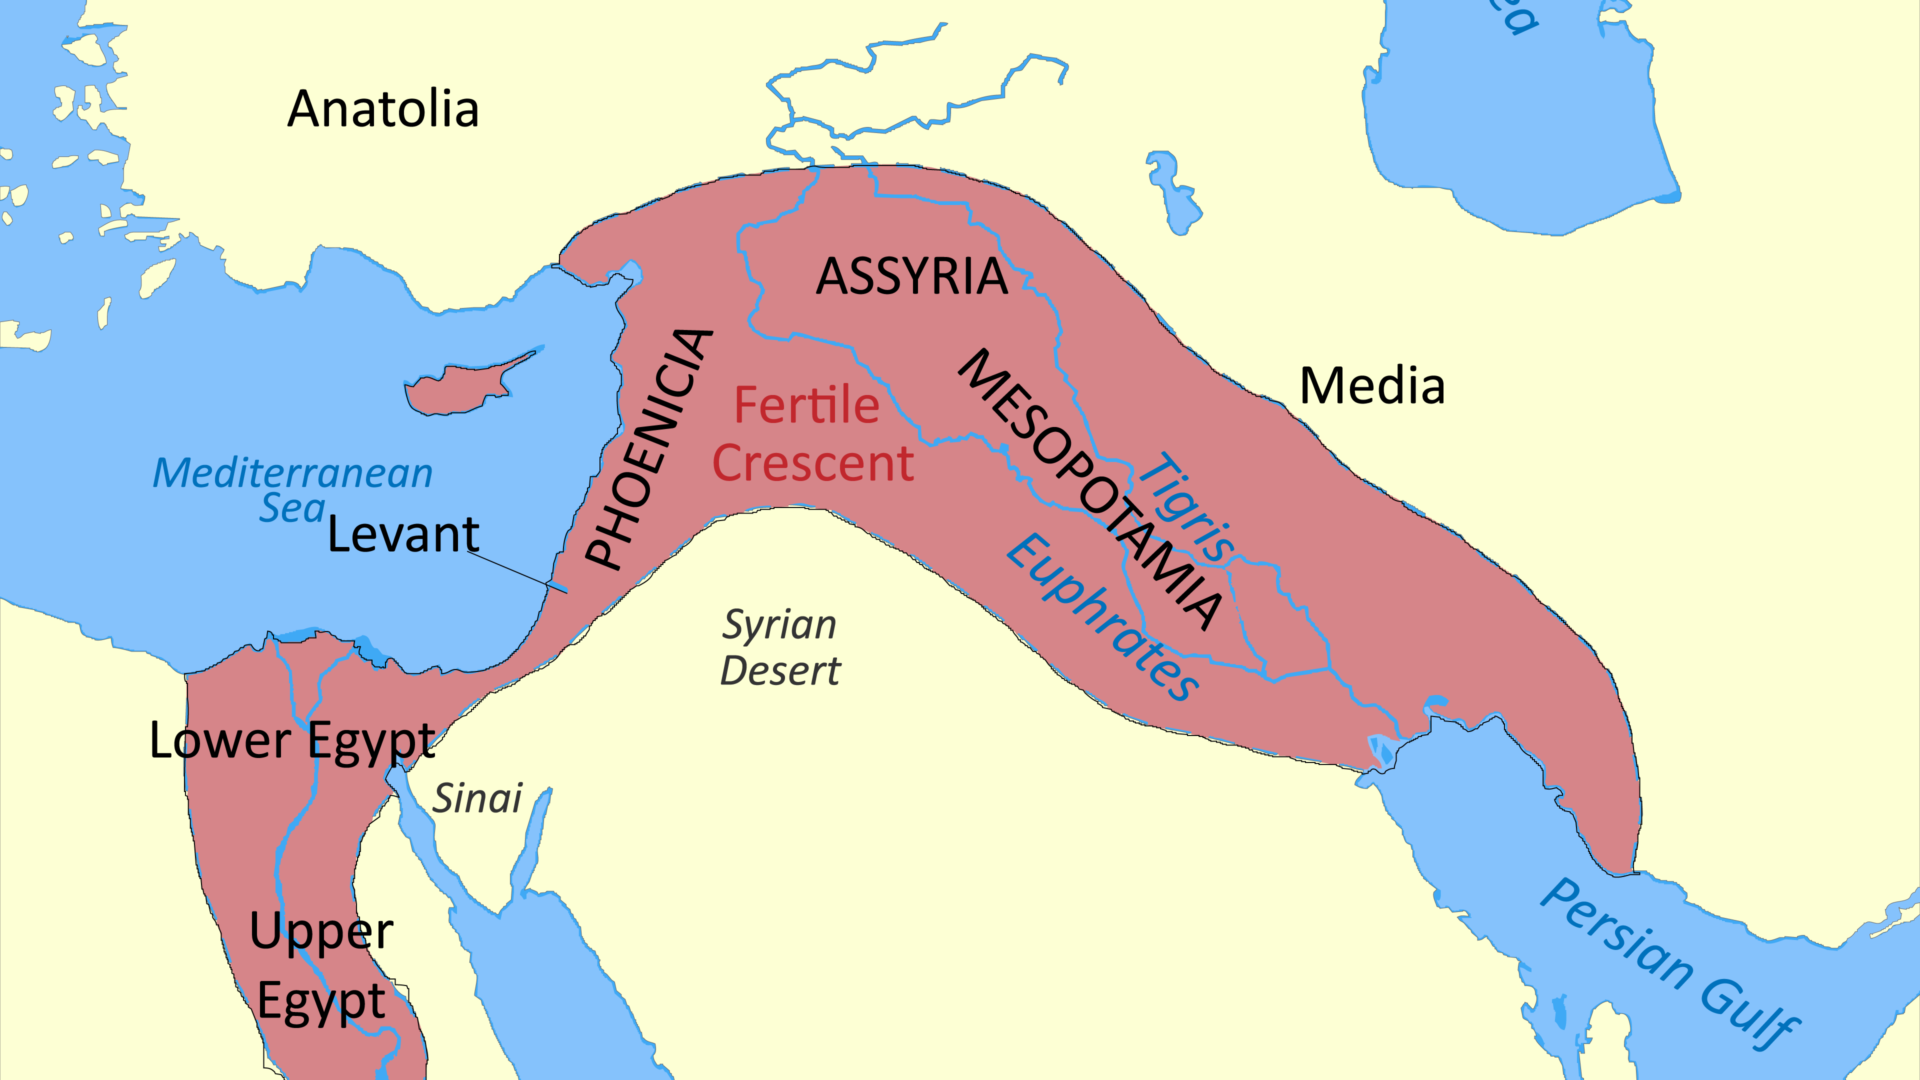 Map of fertile crescent